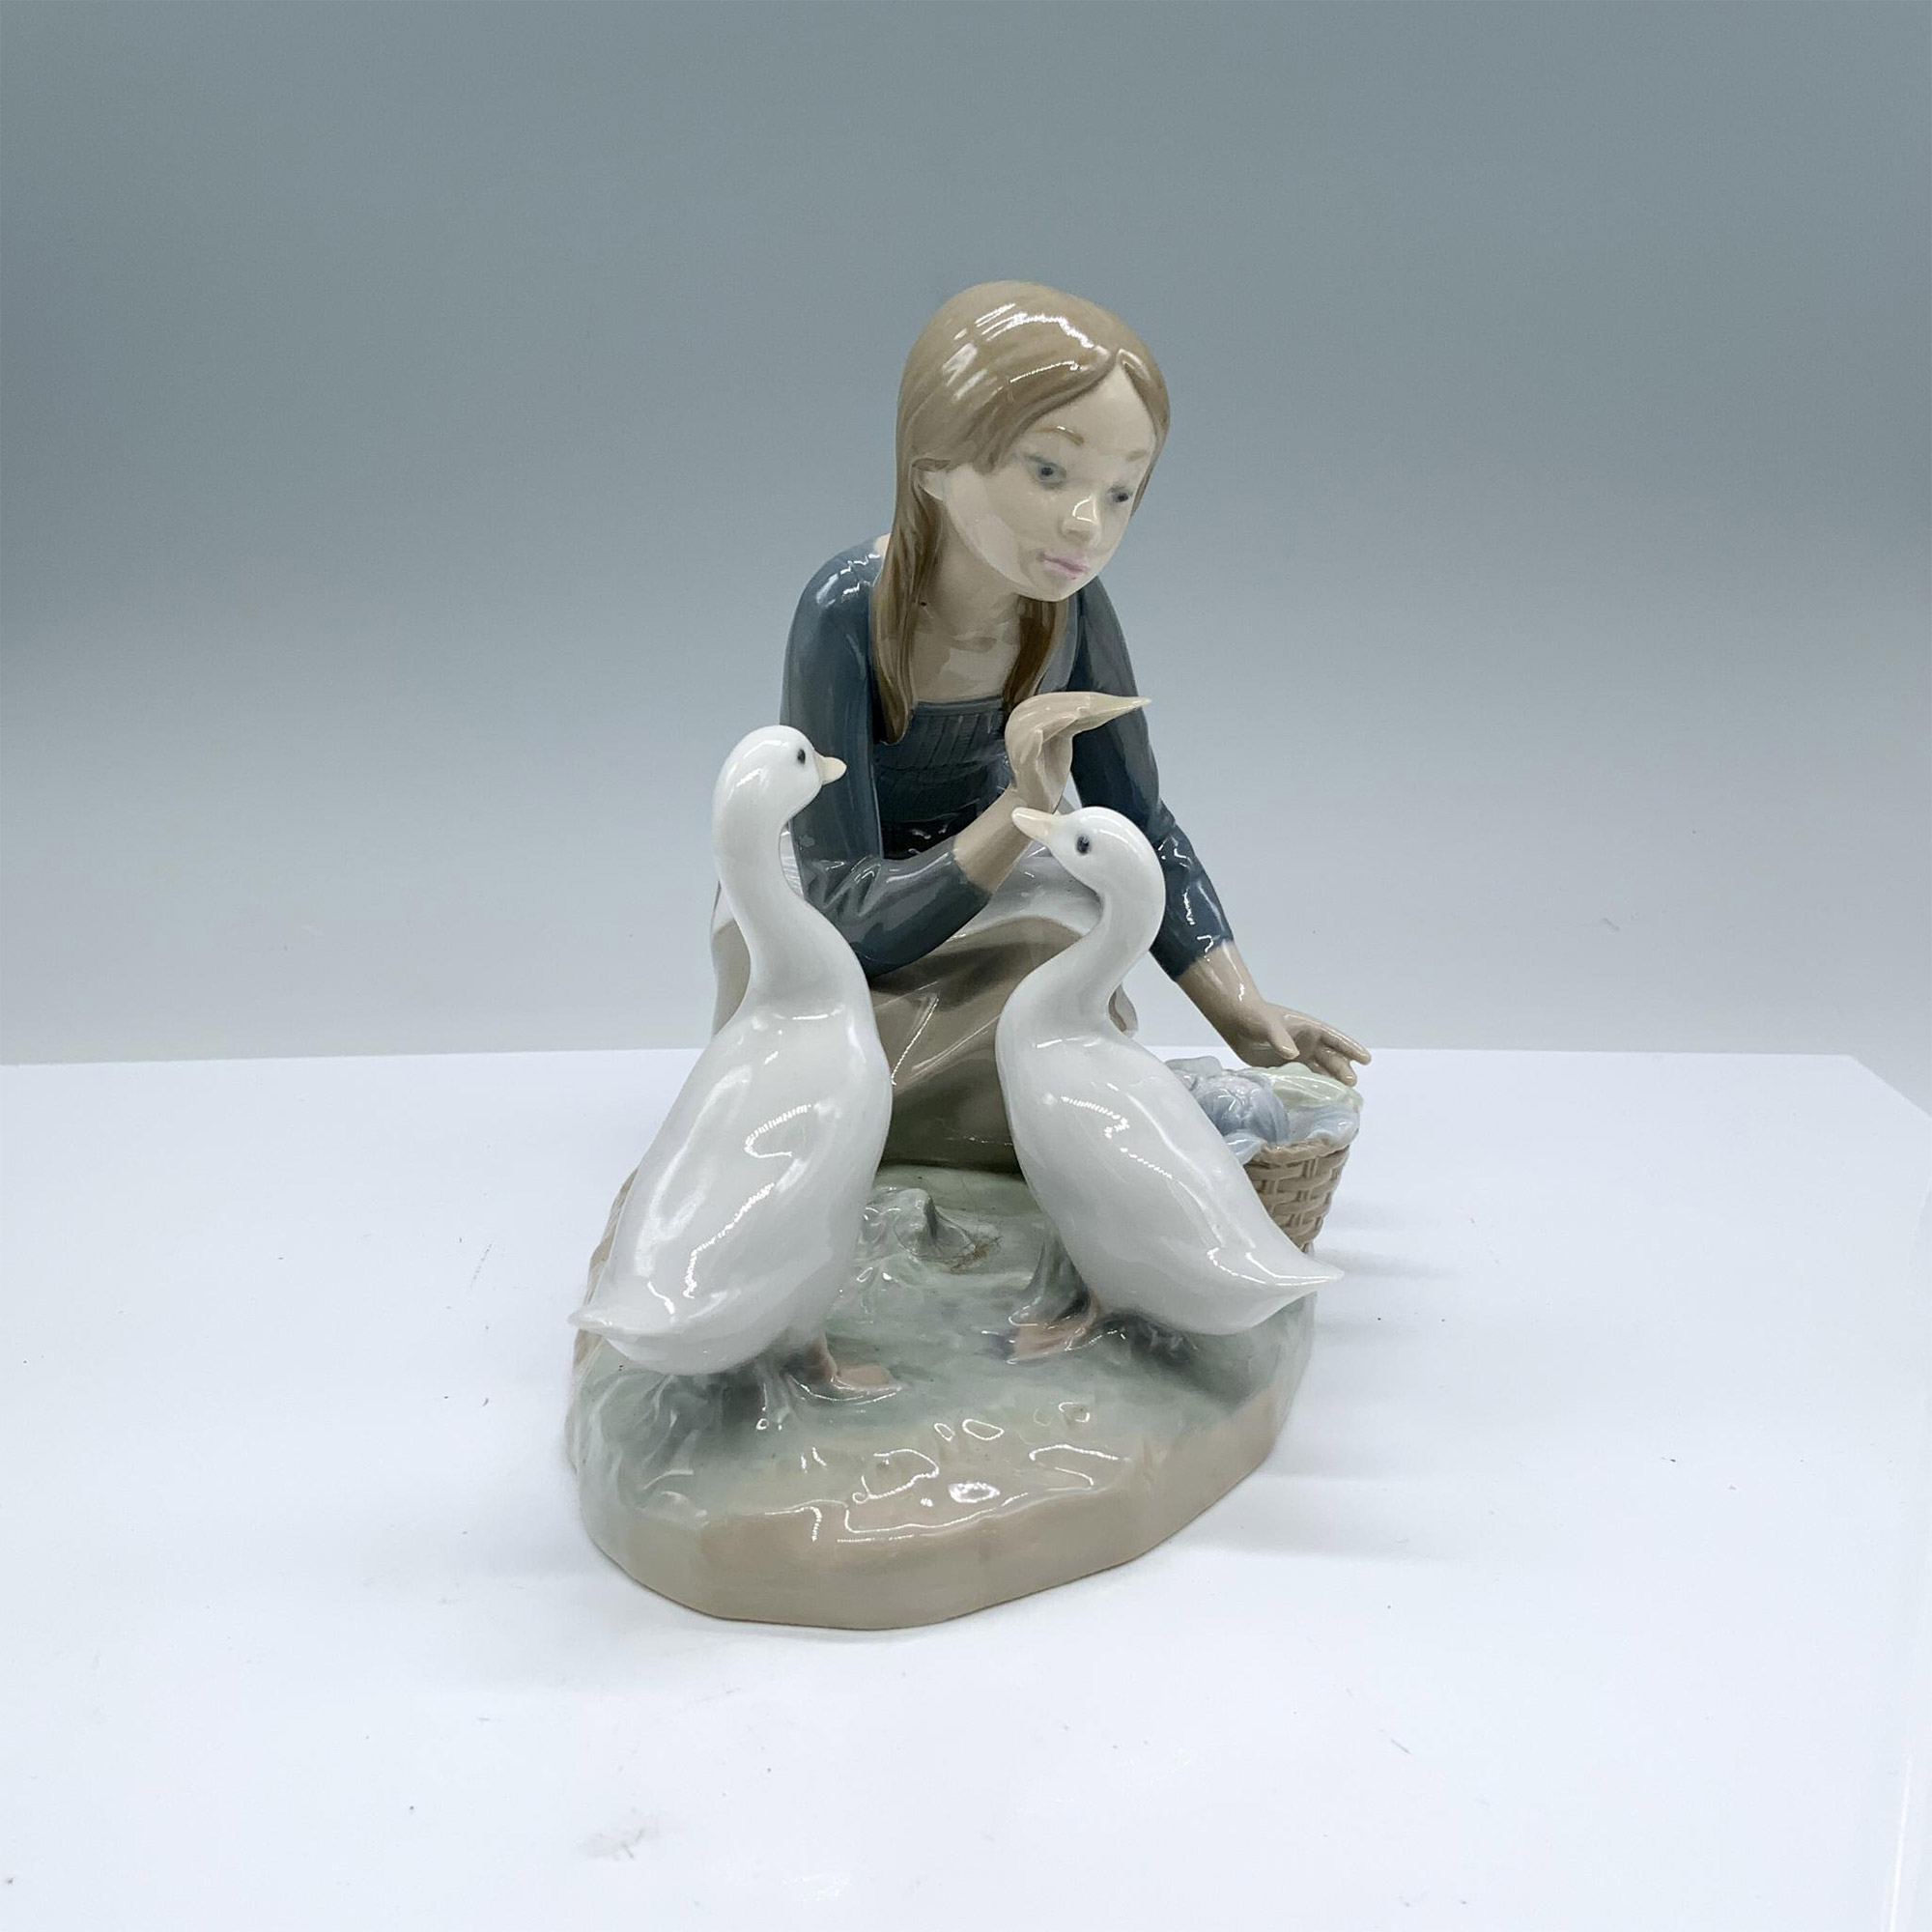 Feeding The Ducks 1004849 - Lladro Porcelain Figurine - Image 2 of 5